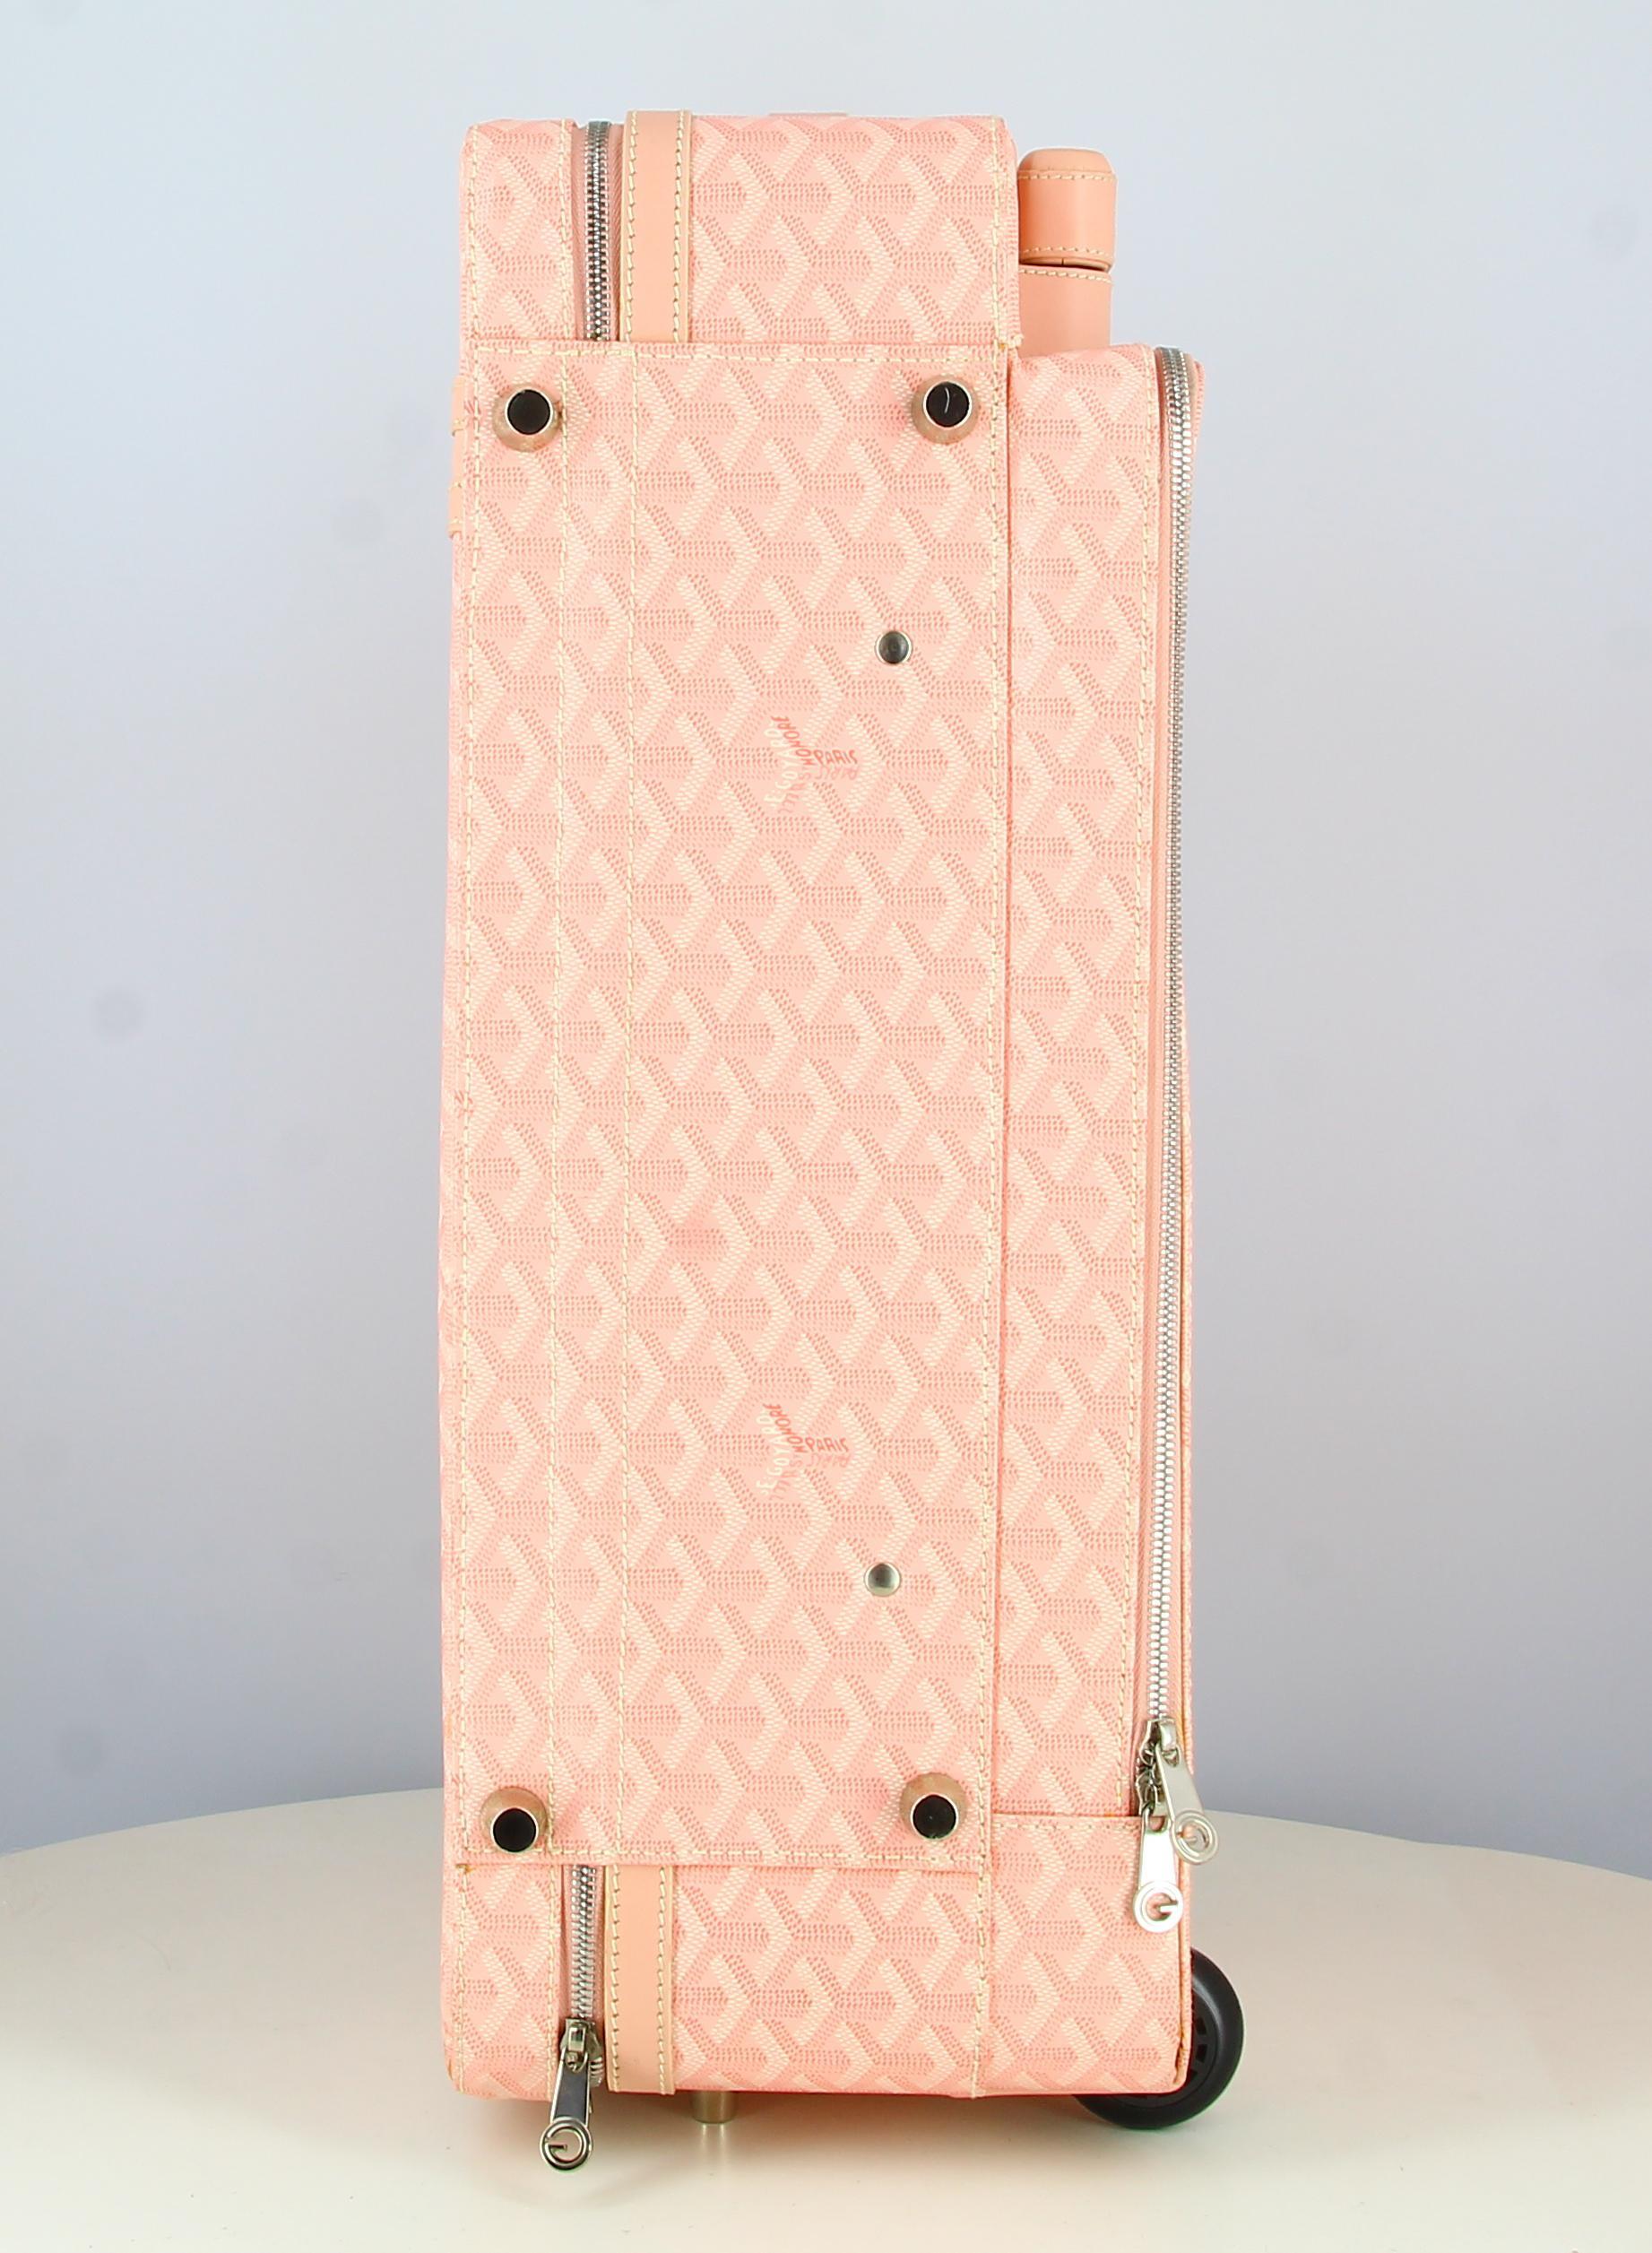 Goyard Monogram Pink Suitcase with Ken profile For Sale 1